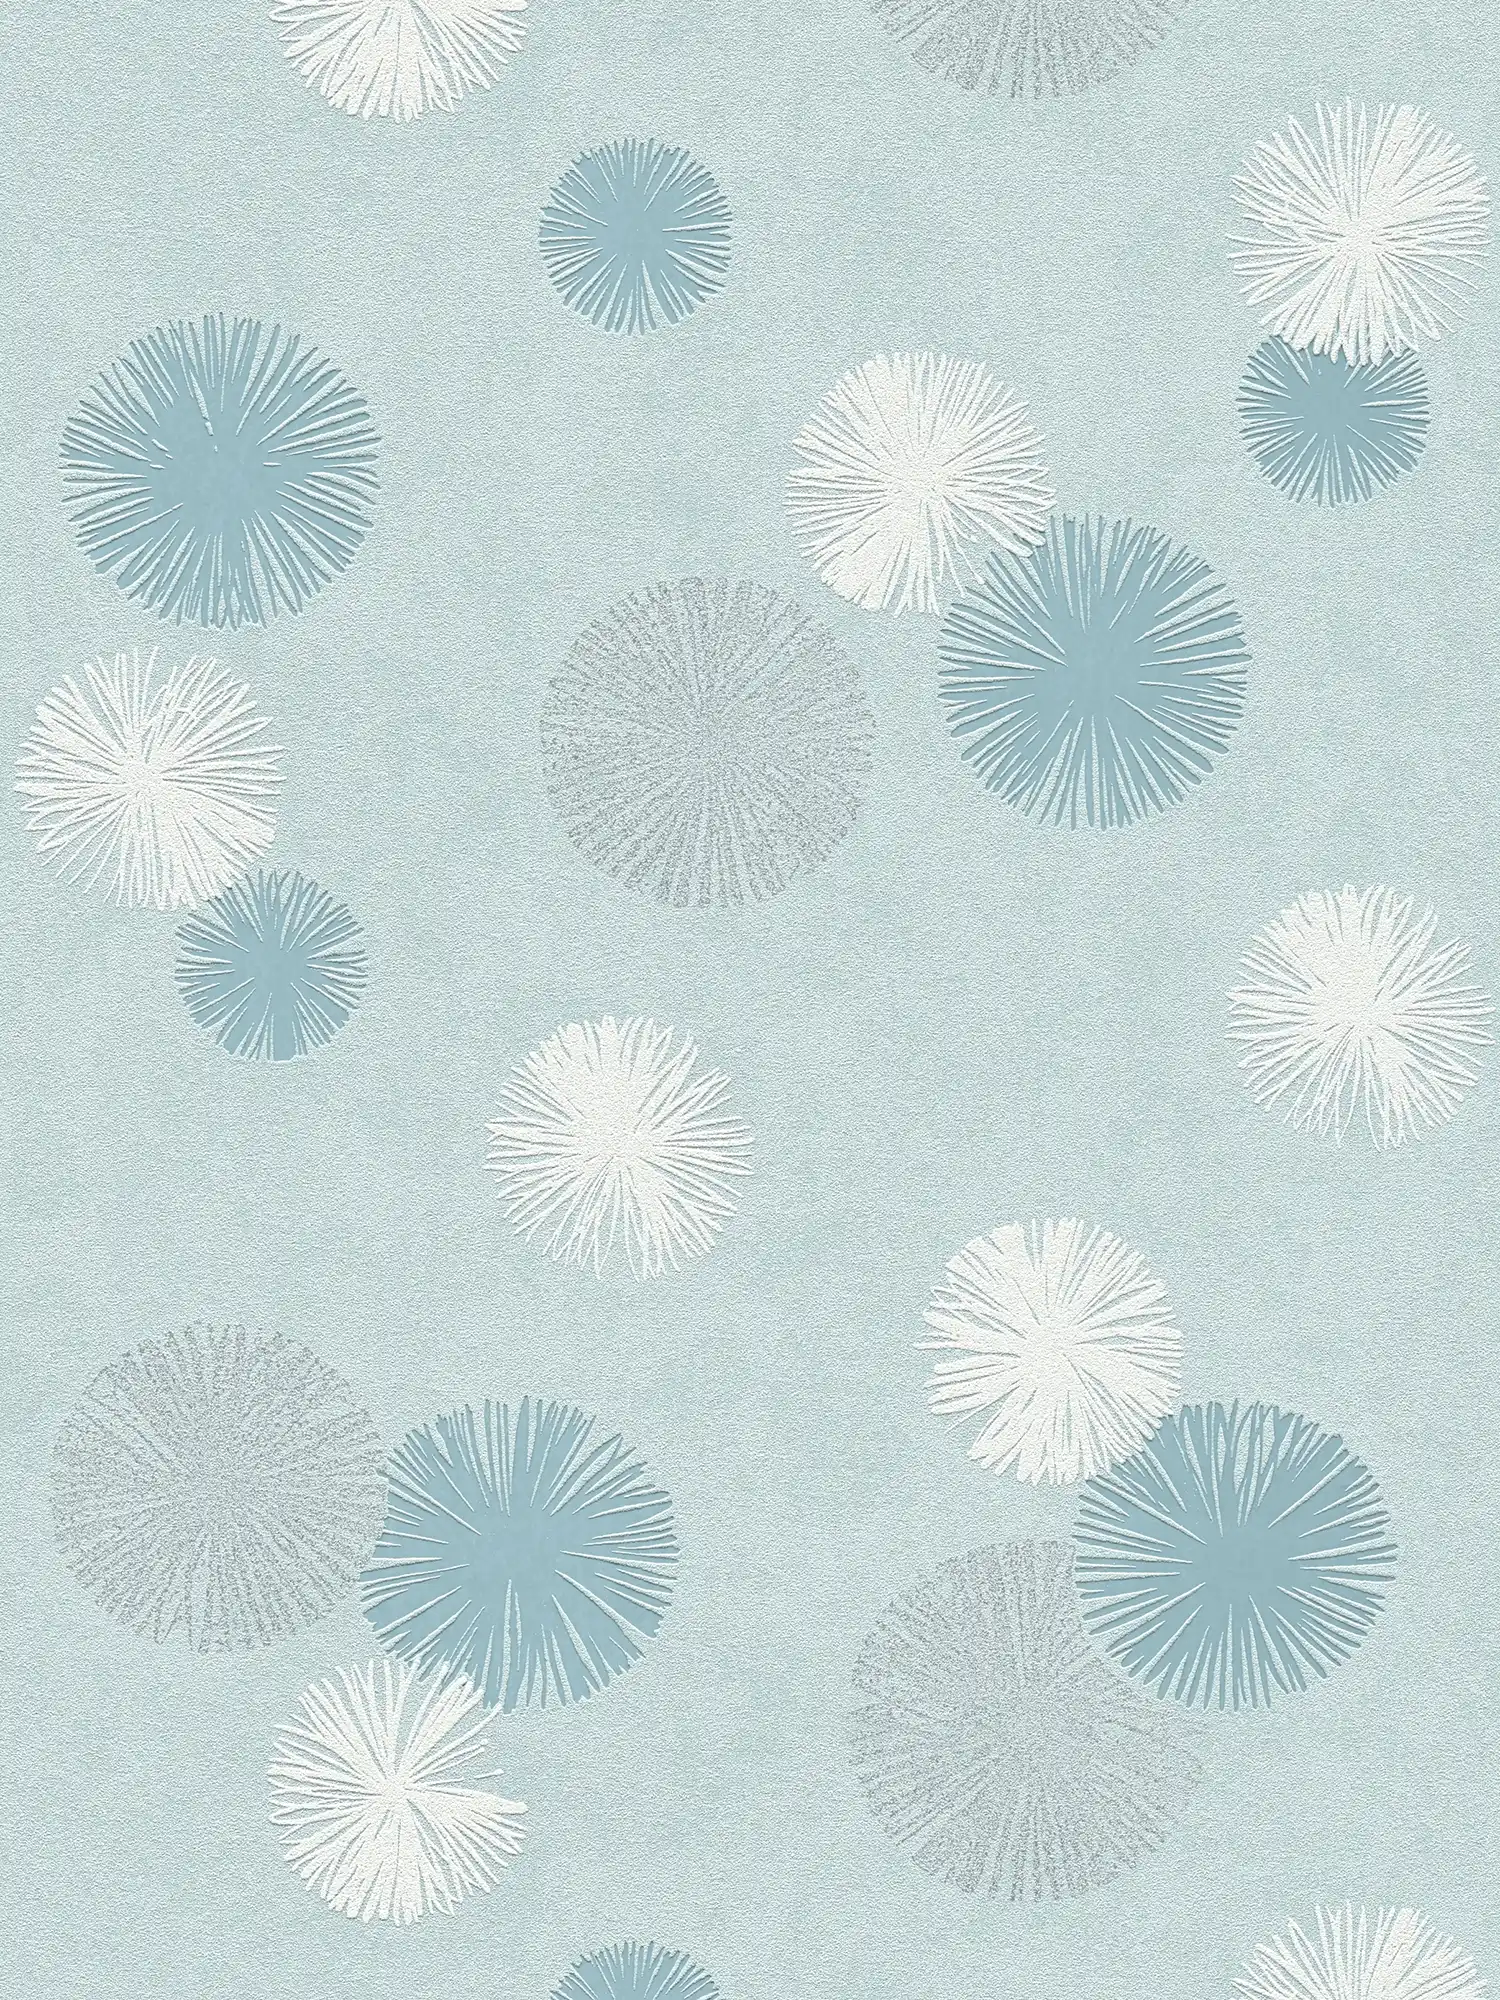 Mintgroen vliesbehang met modern design - blauw
